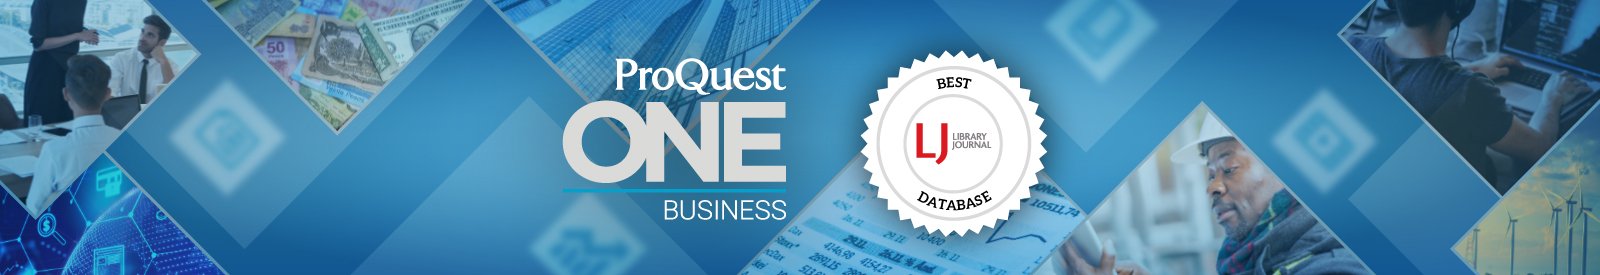 ProQuest One Business:“新产品之最”来自查尔斯顿顾问的评价